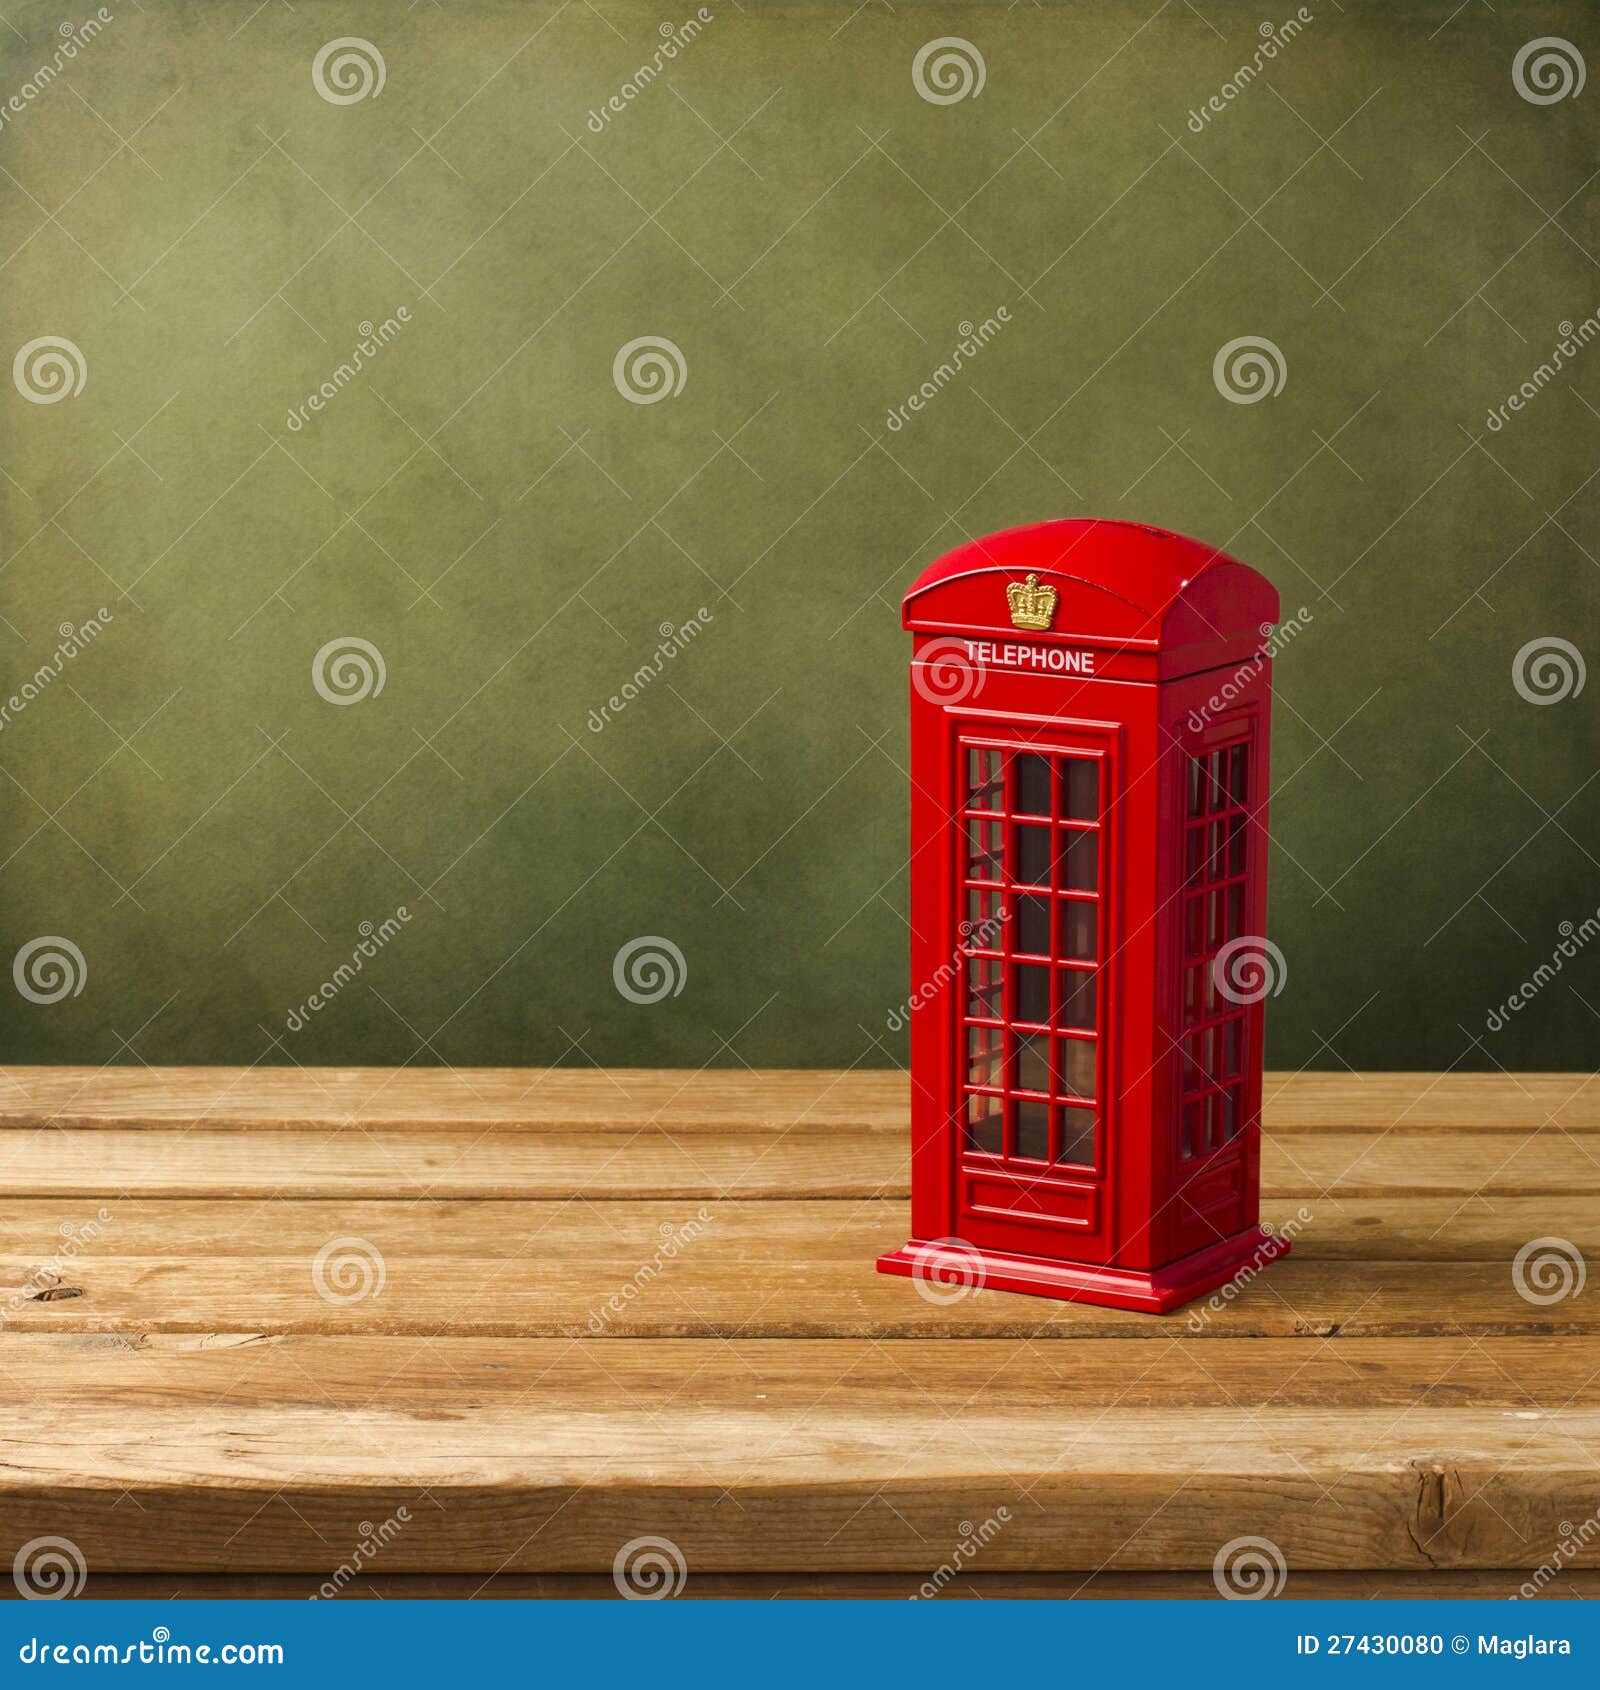 london telephone booth moneybox